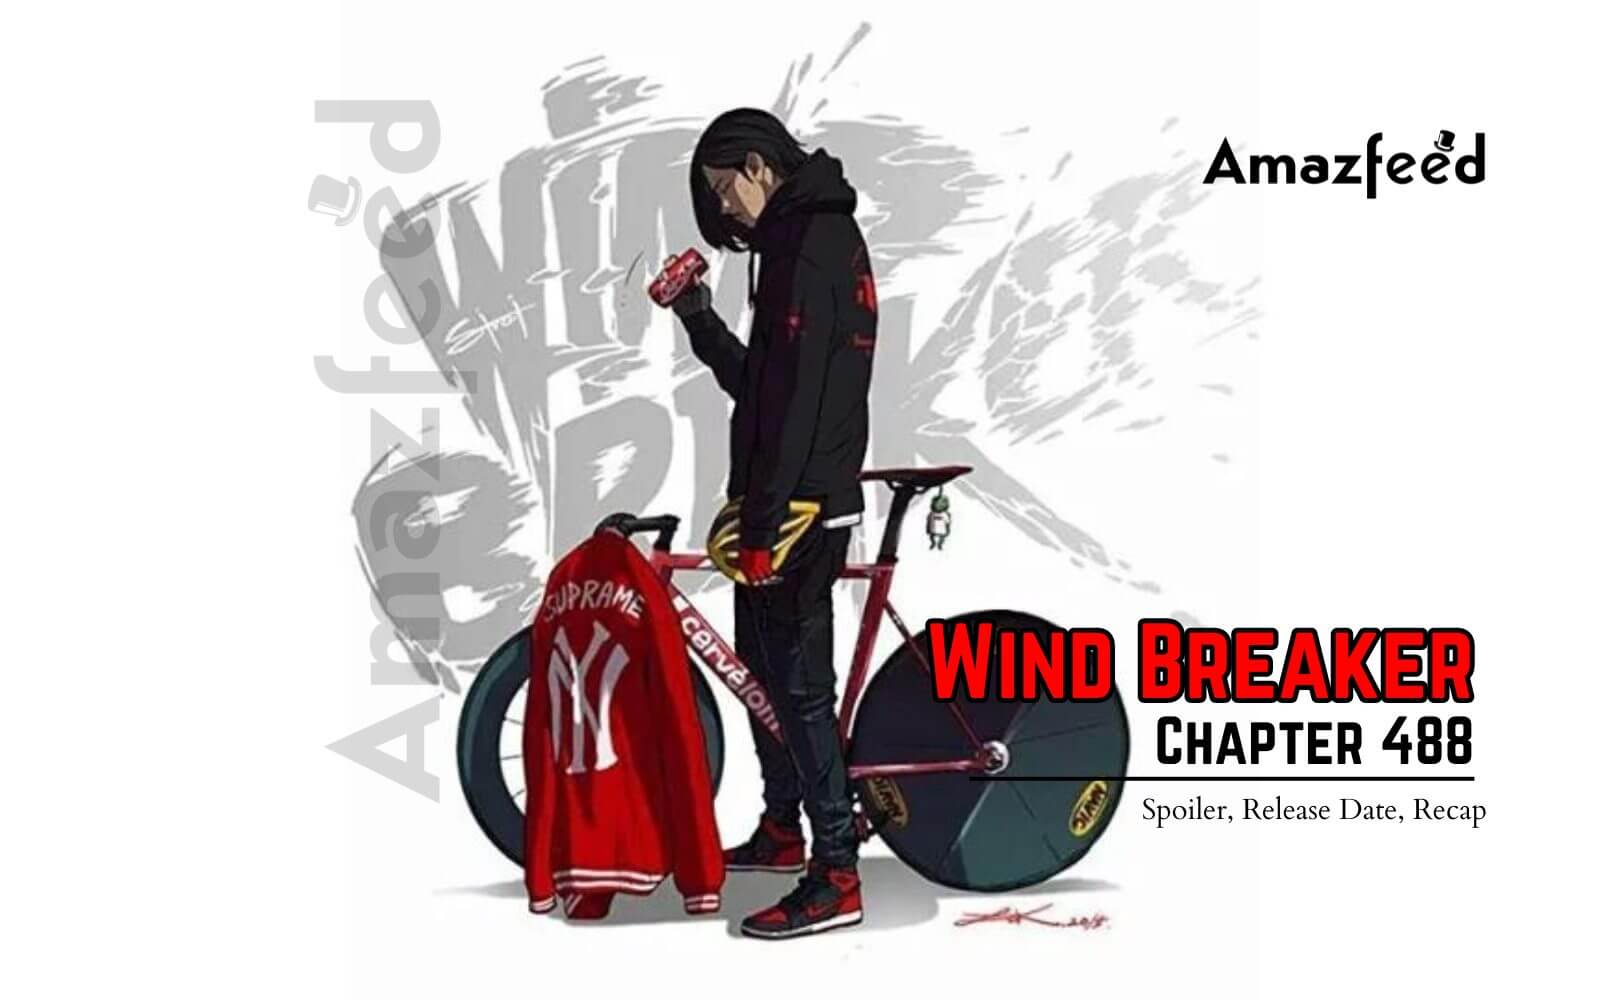 Wind Breaker Chapter 488 Spoiler